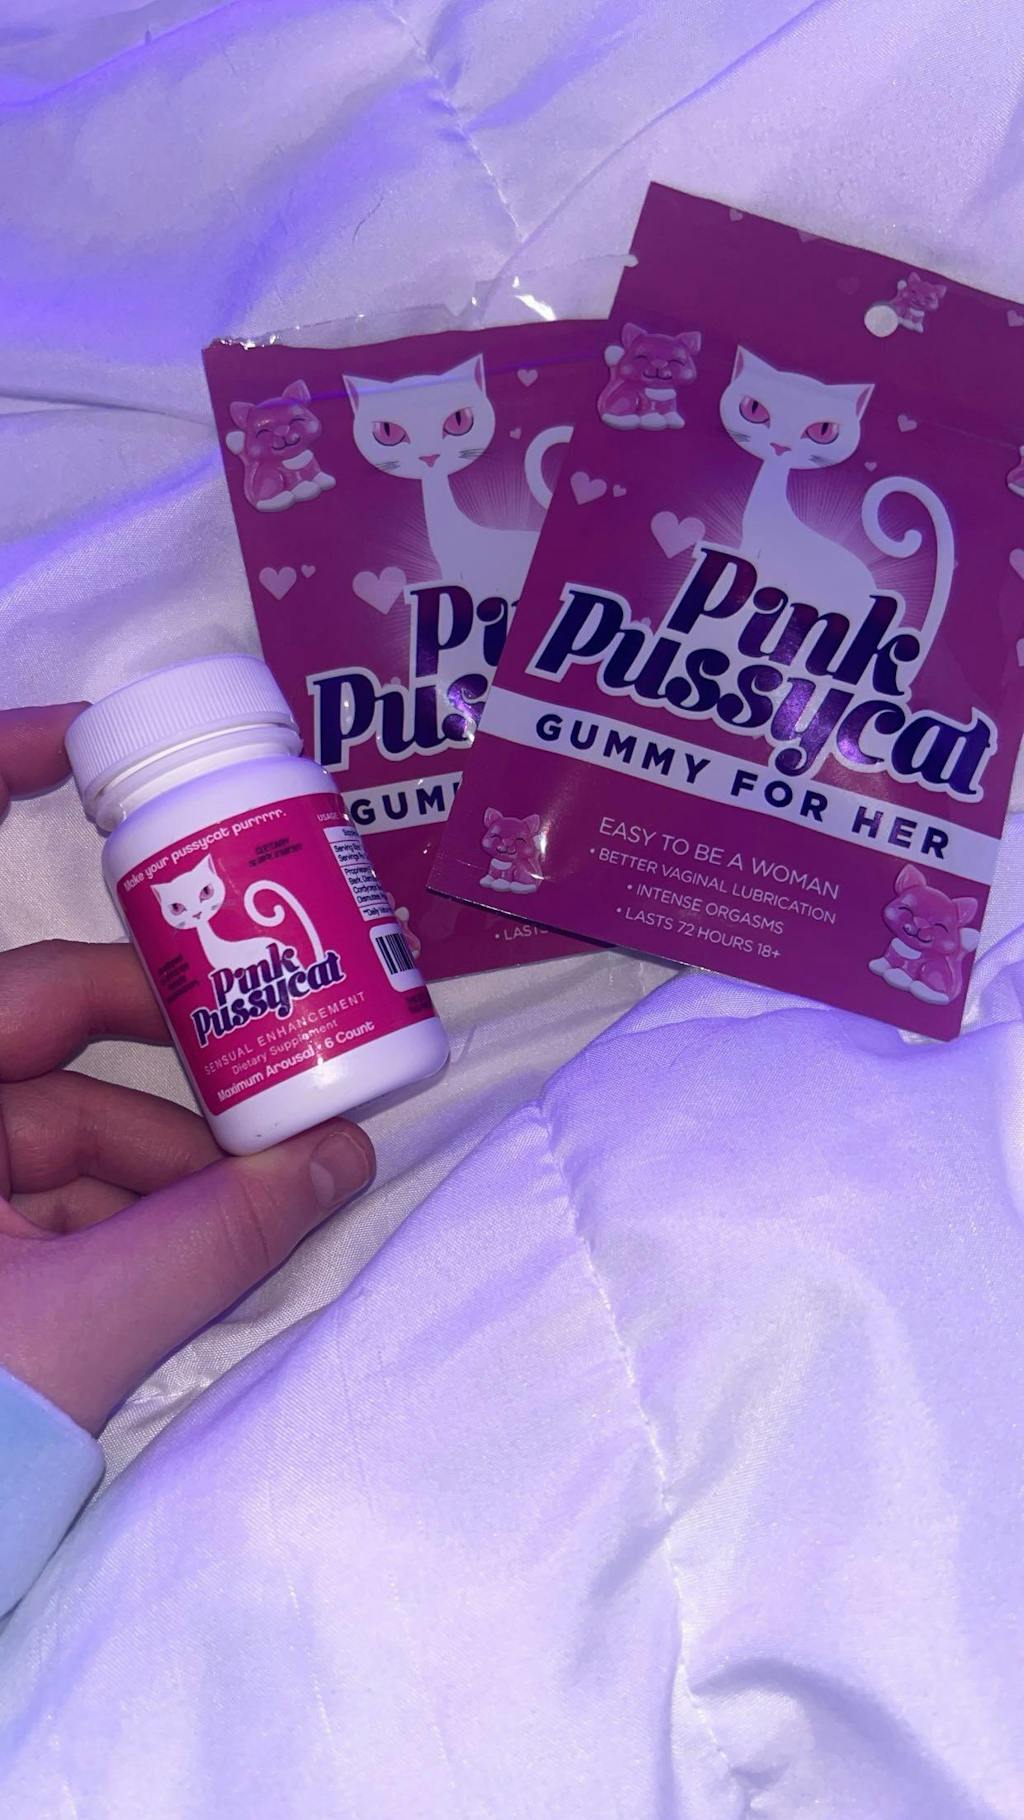 Pink Pussycat Honey 1 Ct Top Female Sexual Enhancement